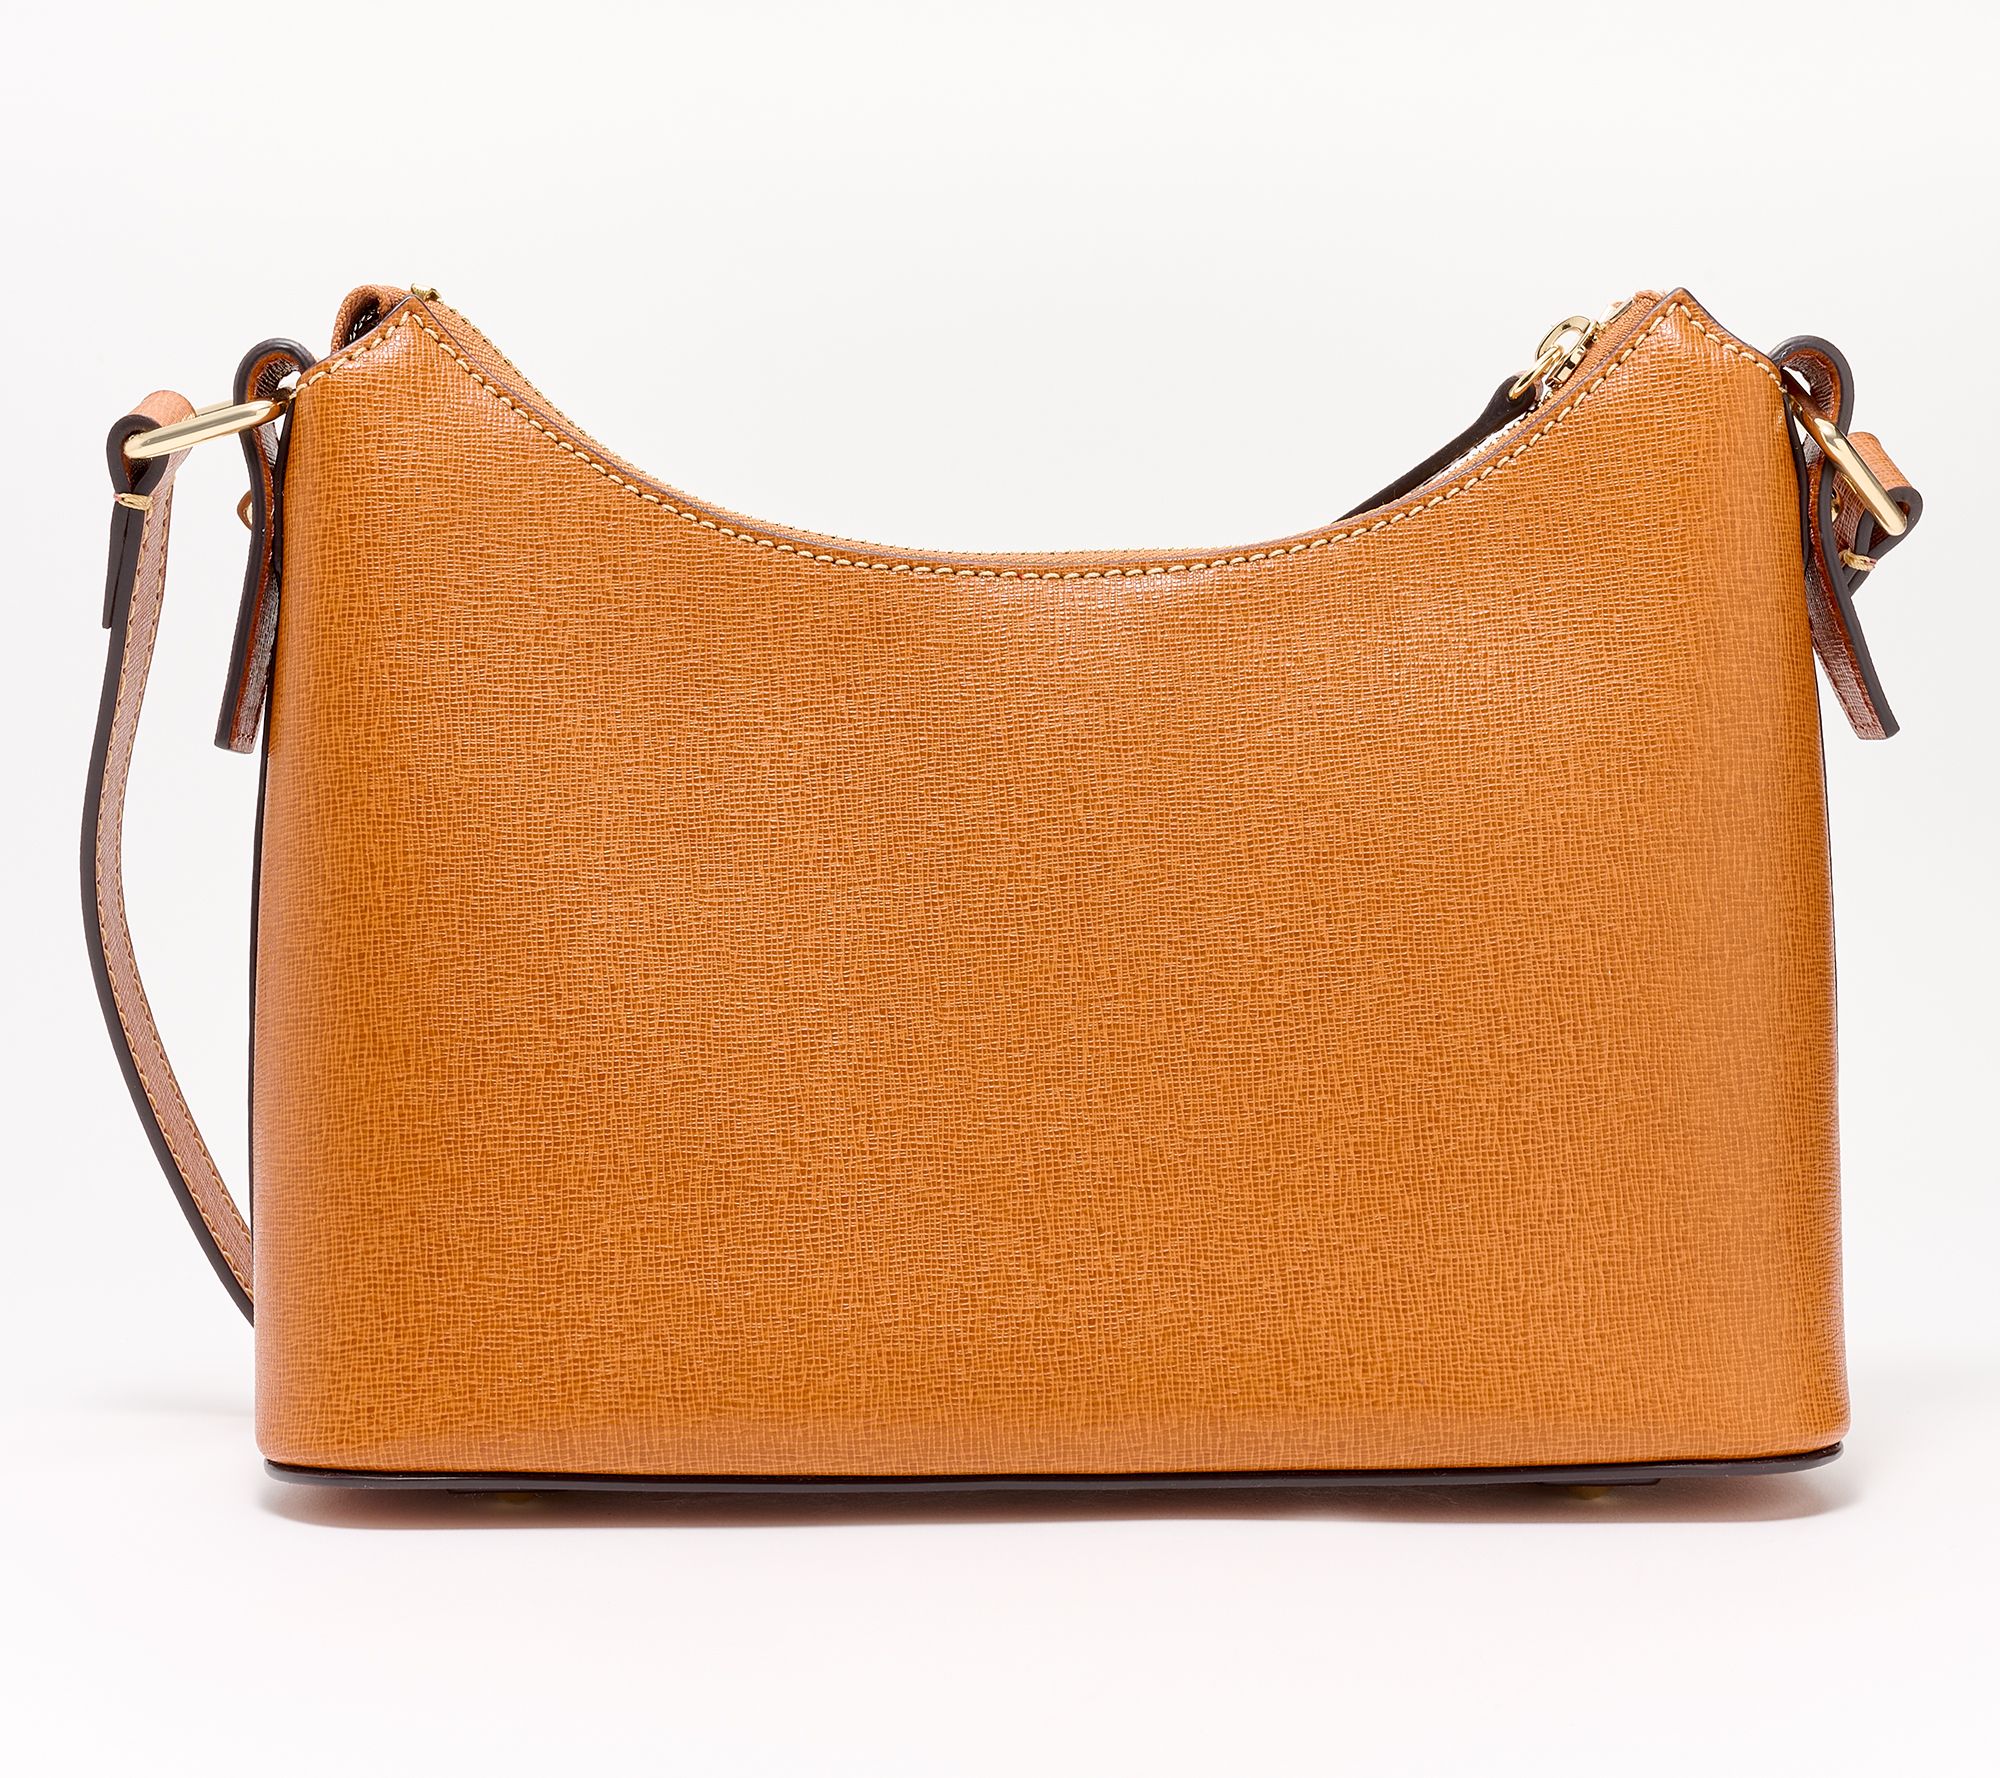 Dooney & Bourke Saffiano Leather Shoulder Bag - Ashby on QVC 